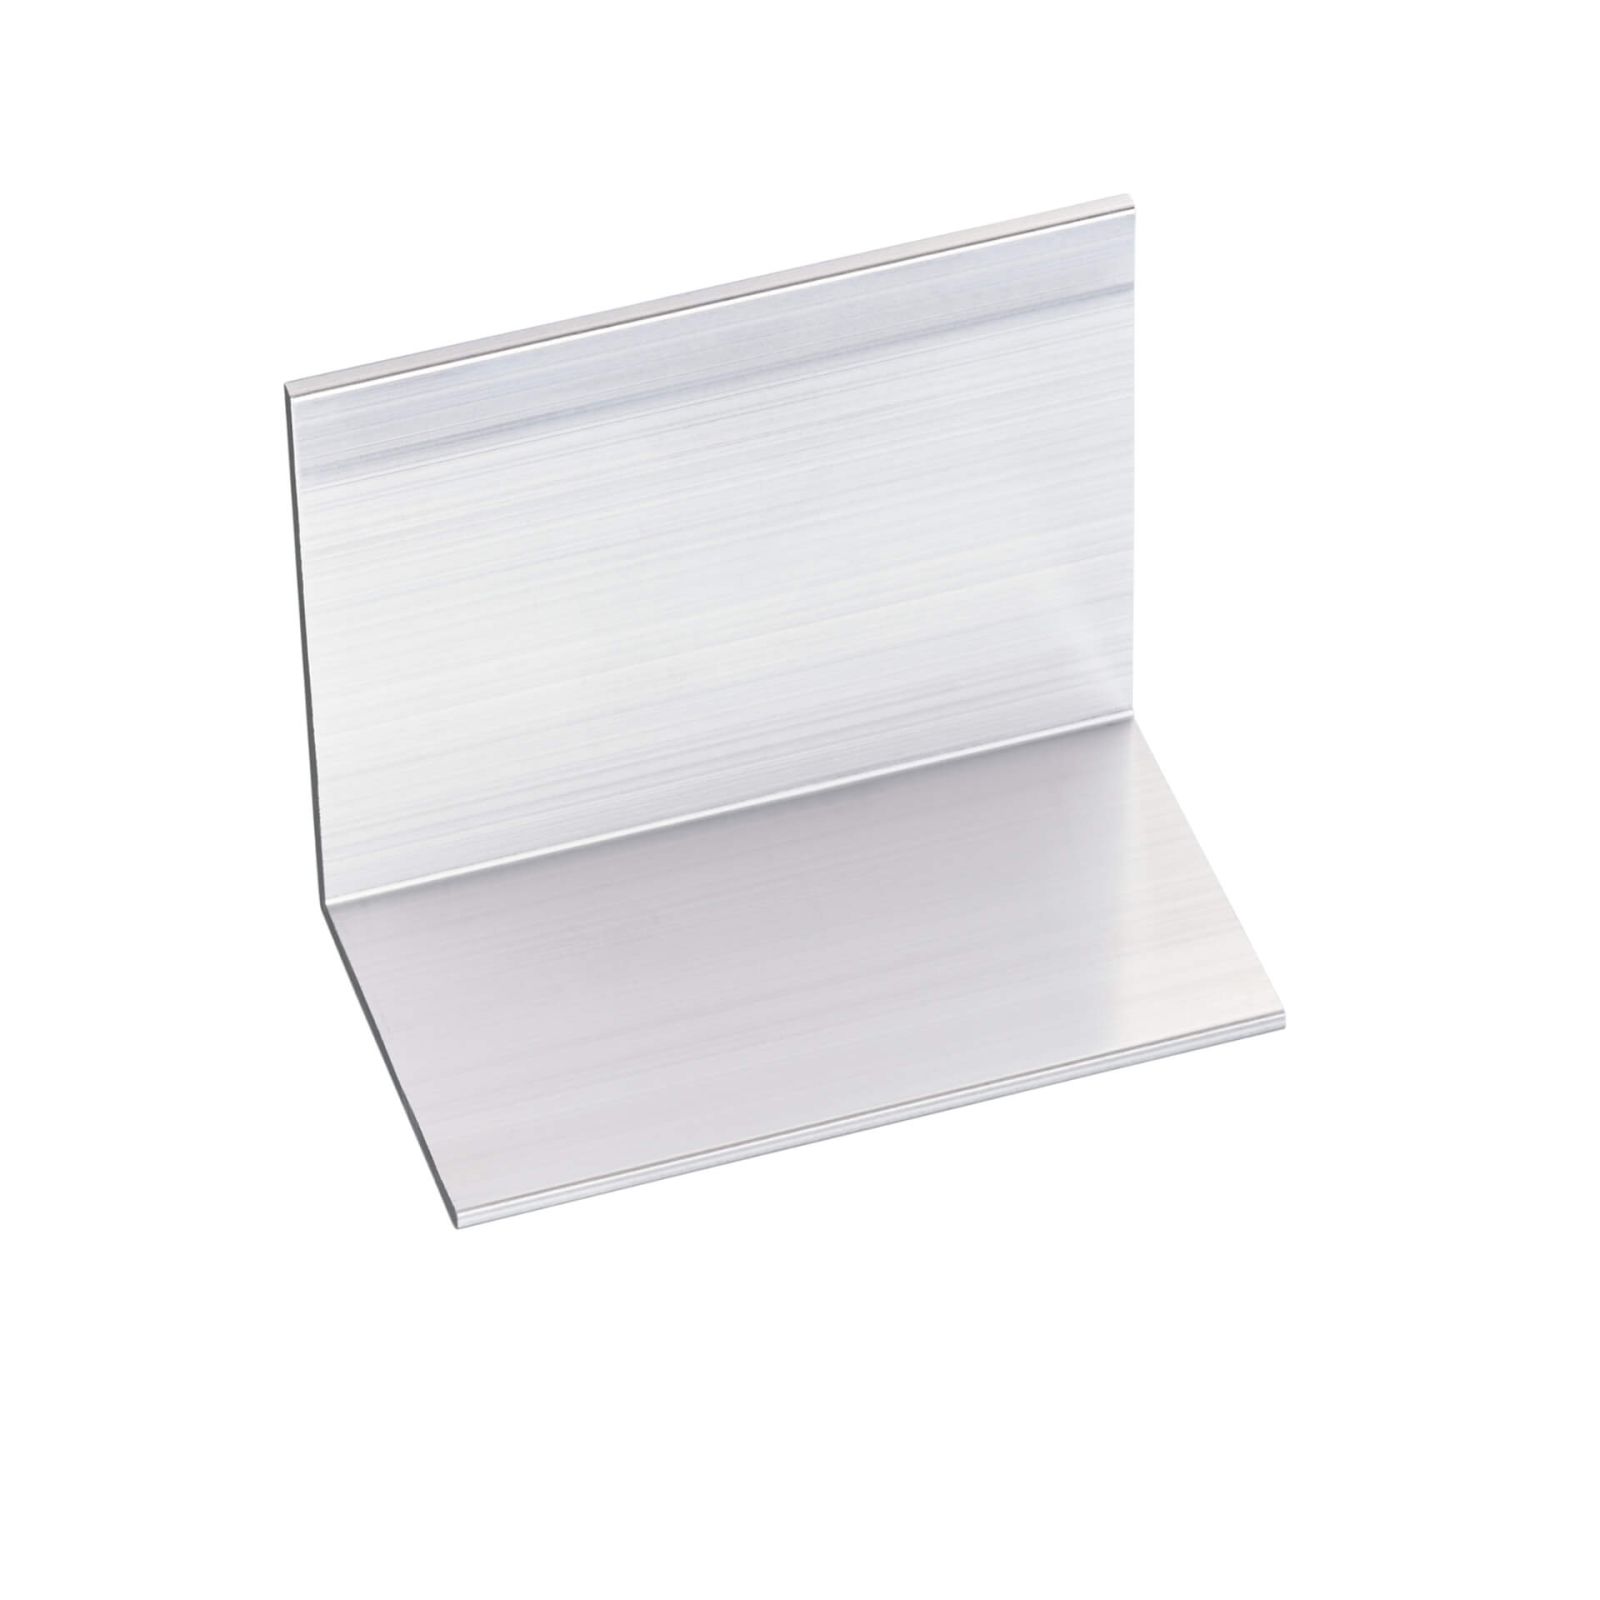 Polycarbonat Stegplatte | 16 mm | Profil A1 | Sparpaket | Plattenbreite 1200 mm | Klar | Blueline | Breite 3,74 m | Länge 2,00 m #9